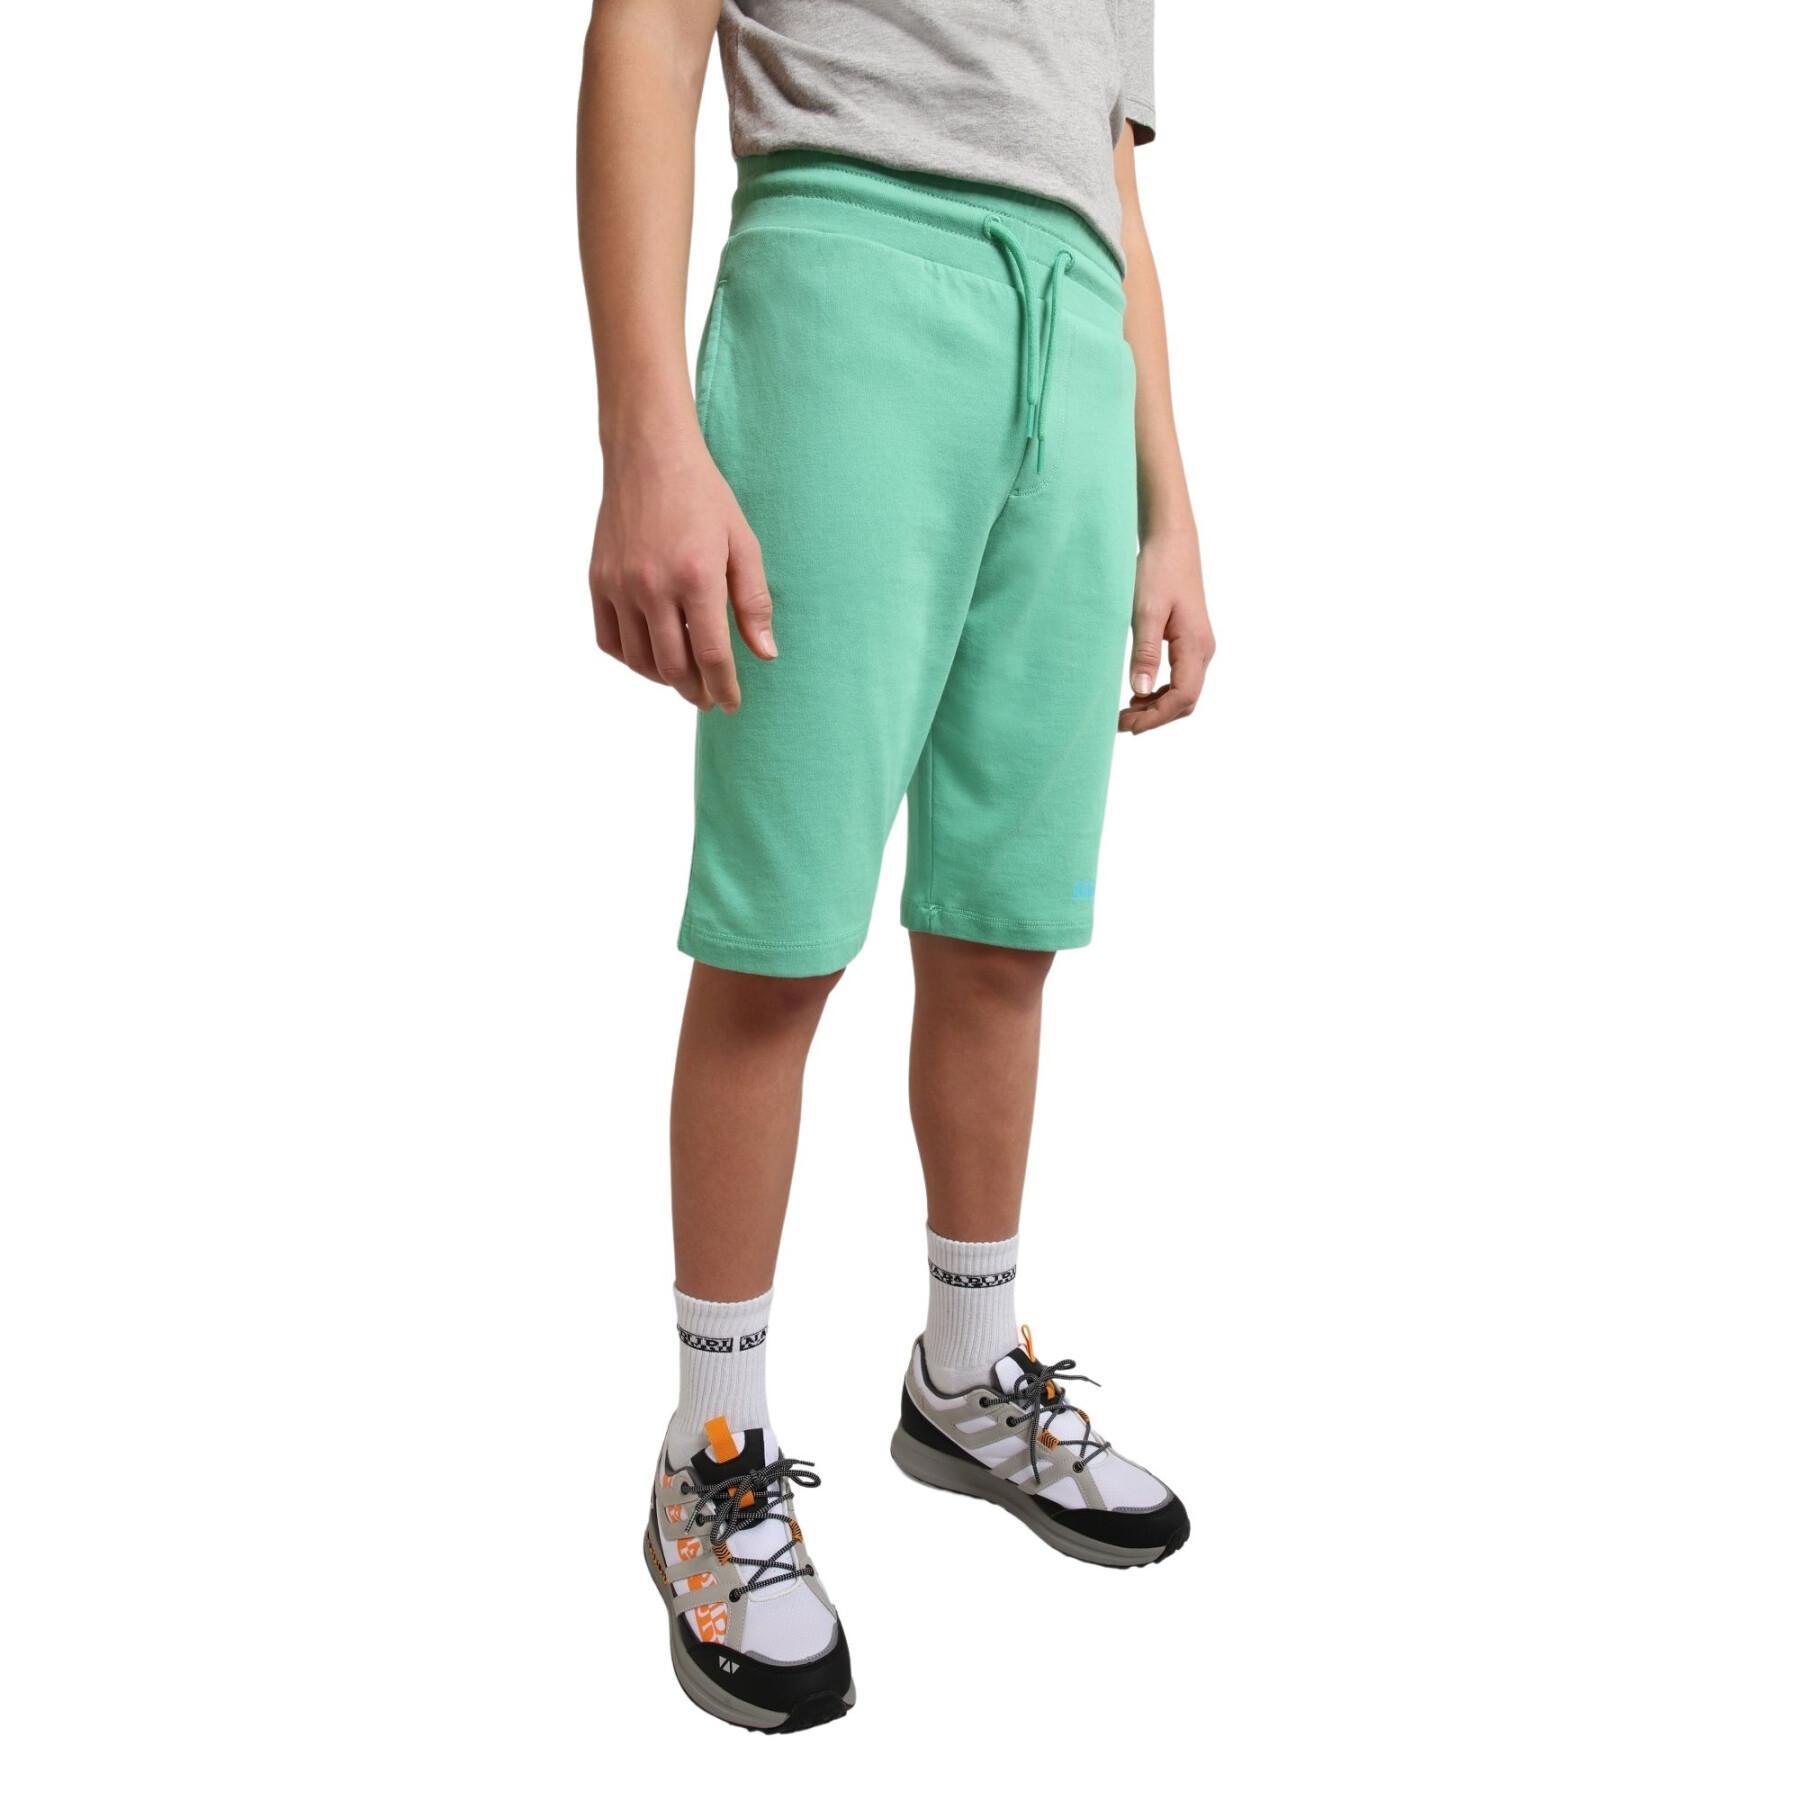 Bermuda shorts for children Napapijri N-Box